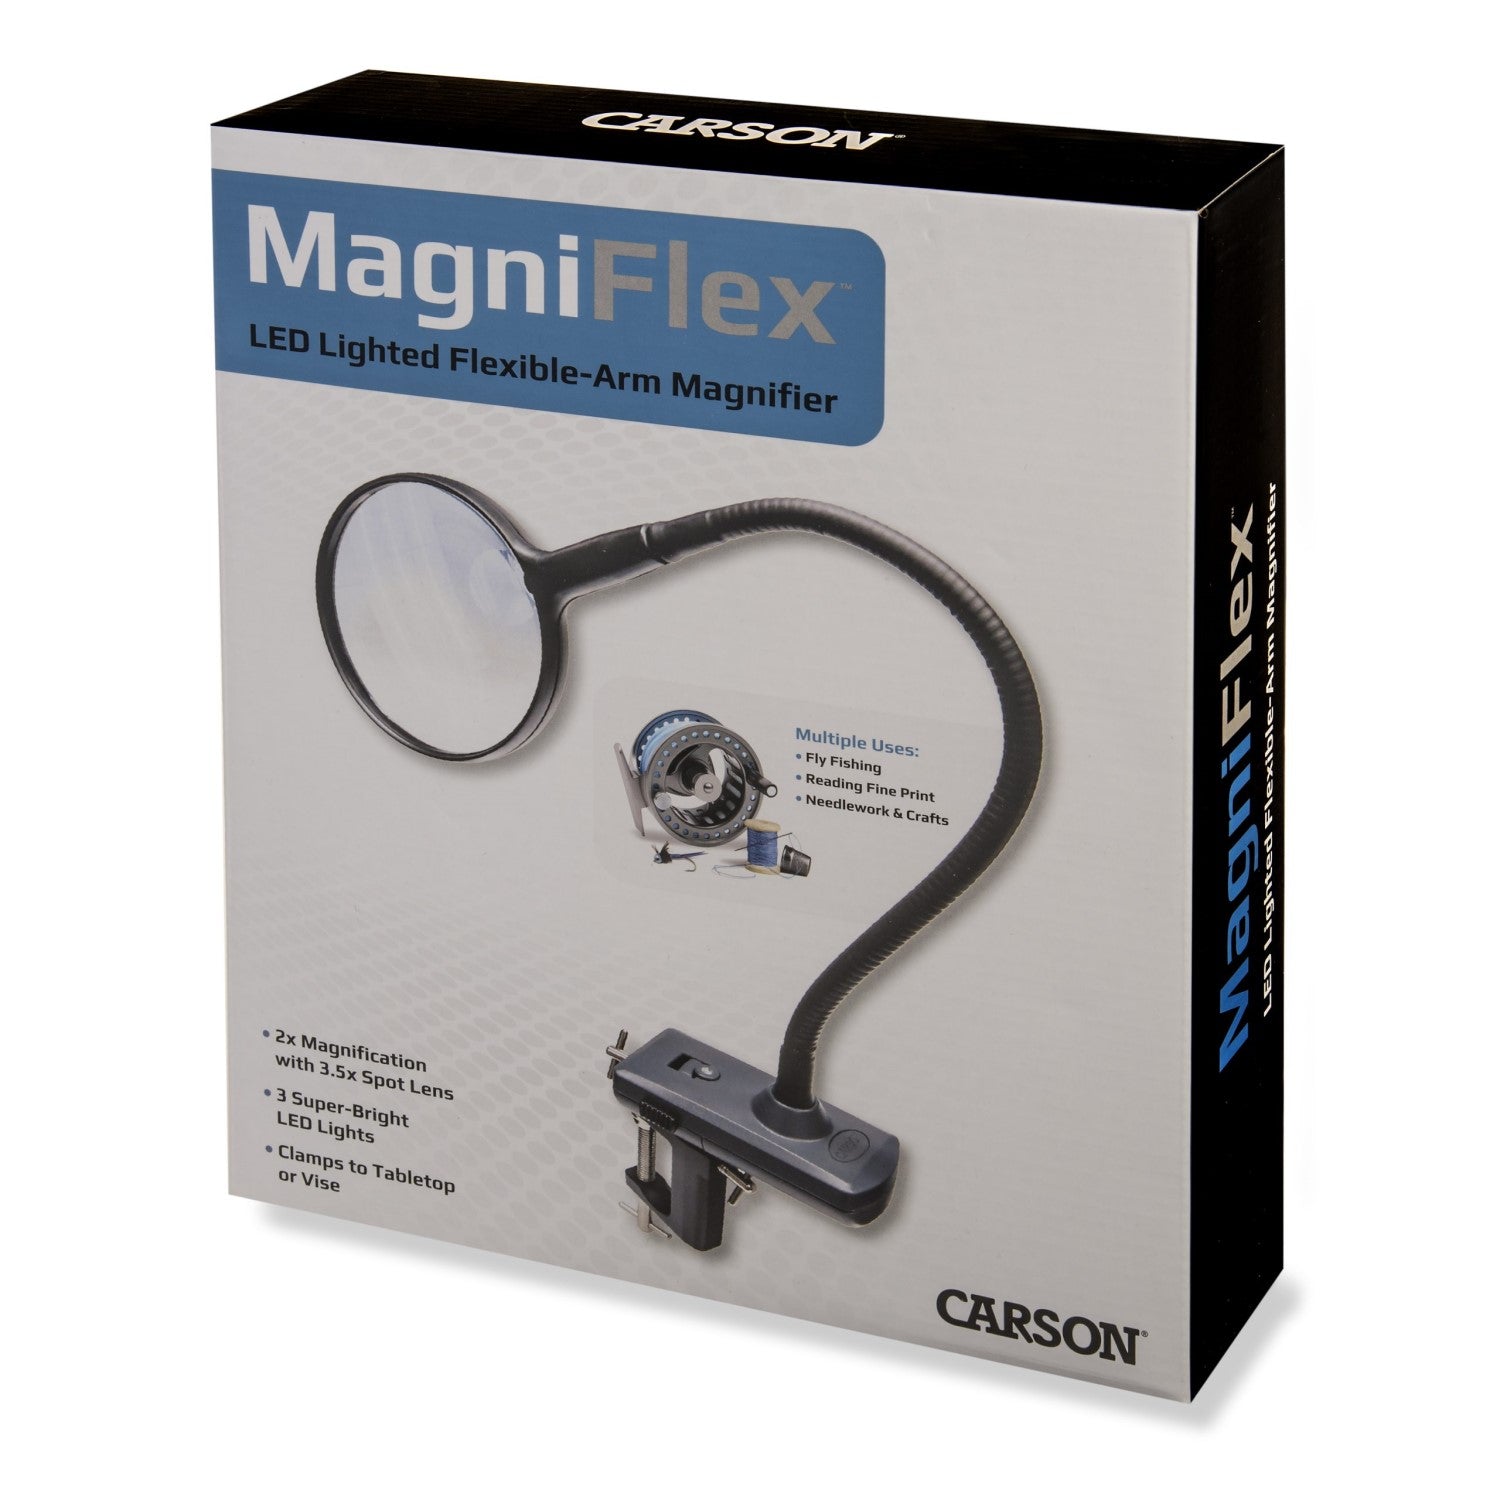 Image of  Magniflex magnifier box.